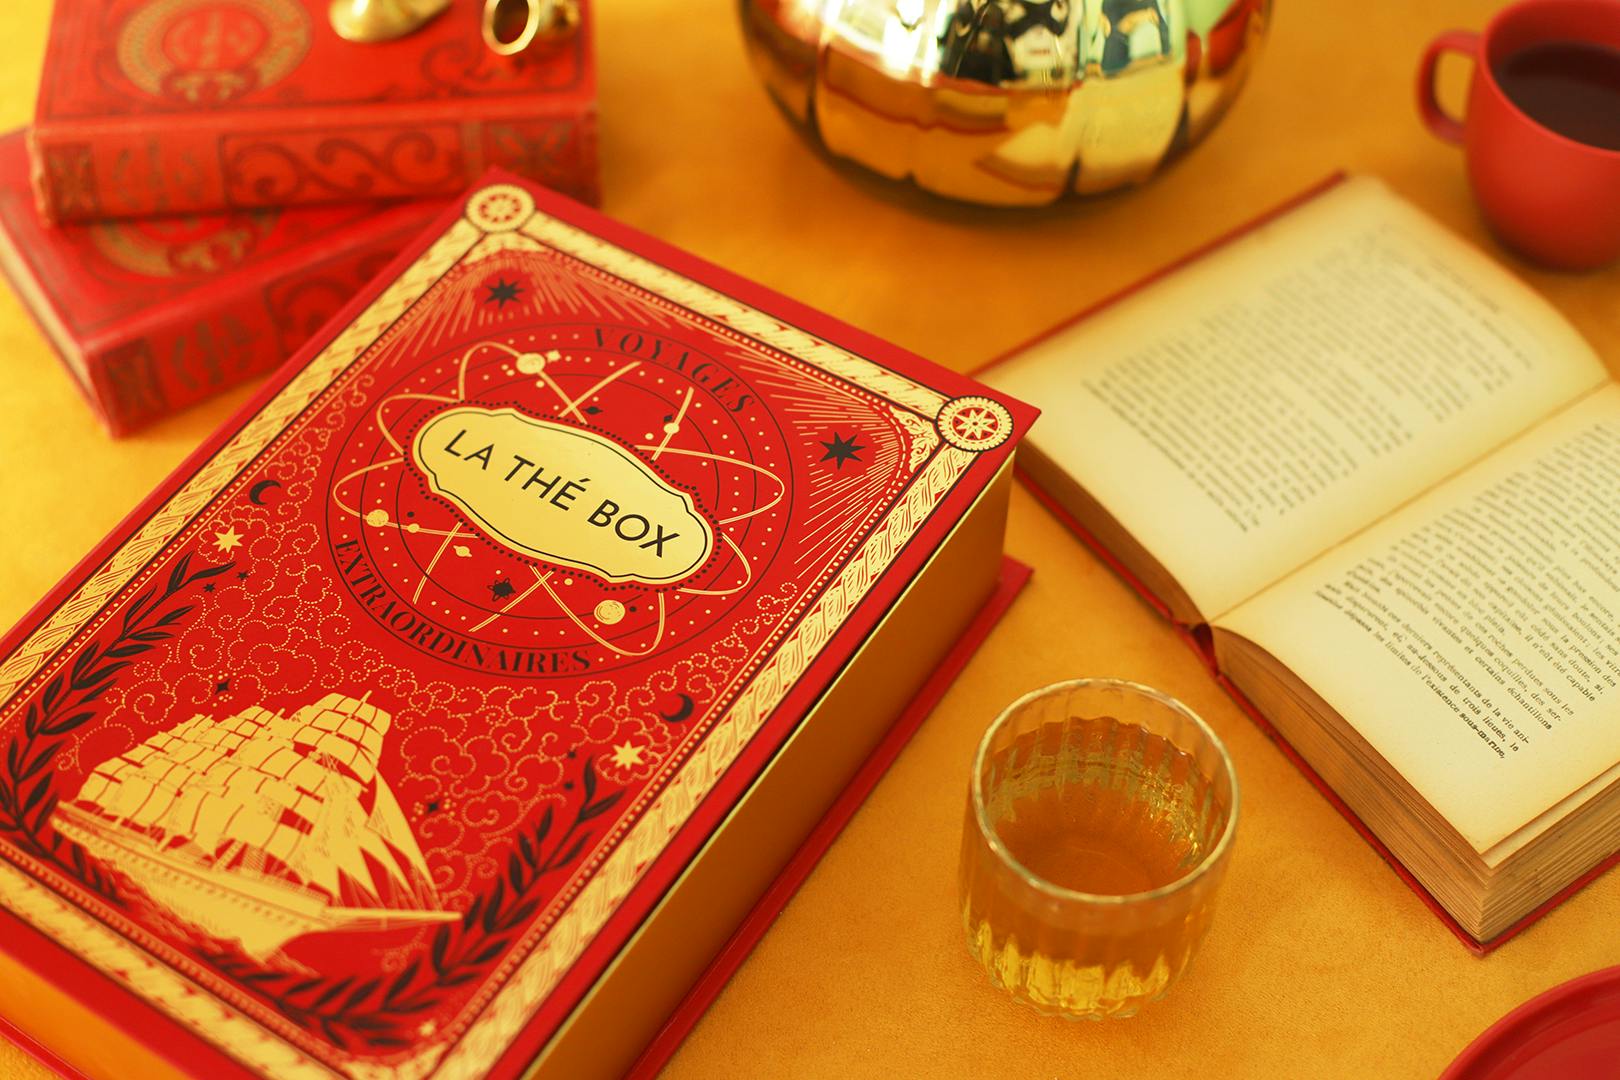 Picture of la thé box Jules Verne edition.